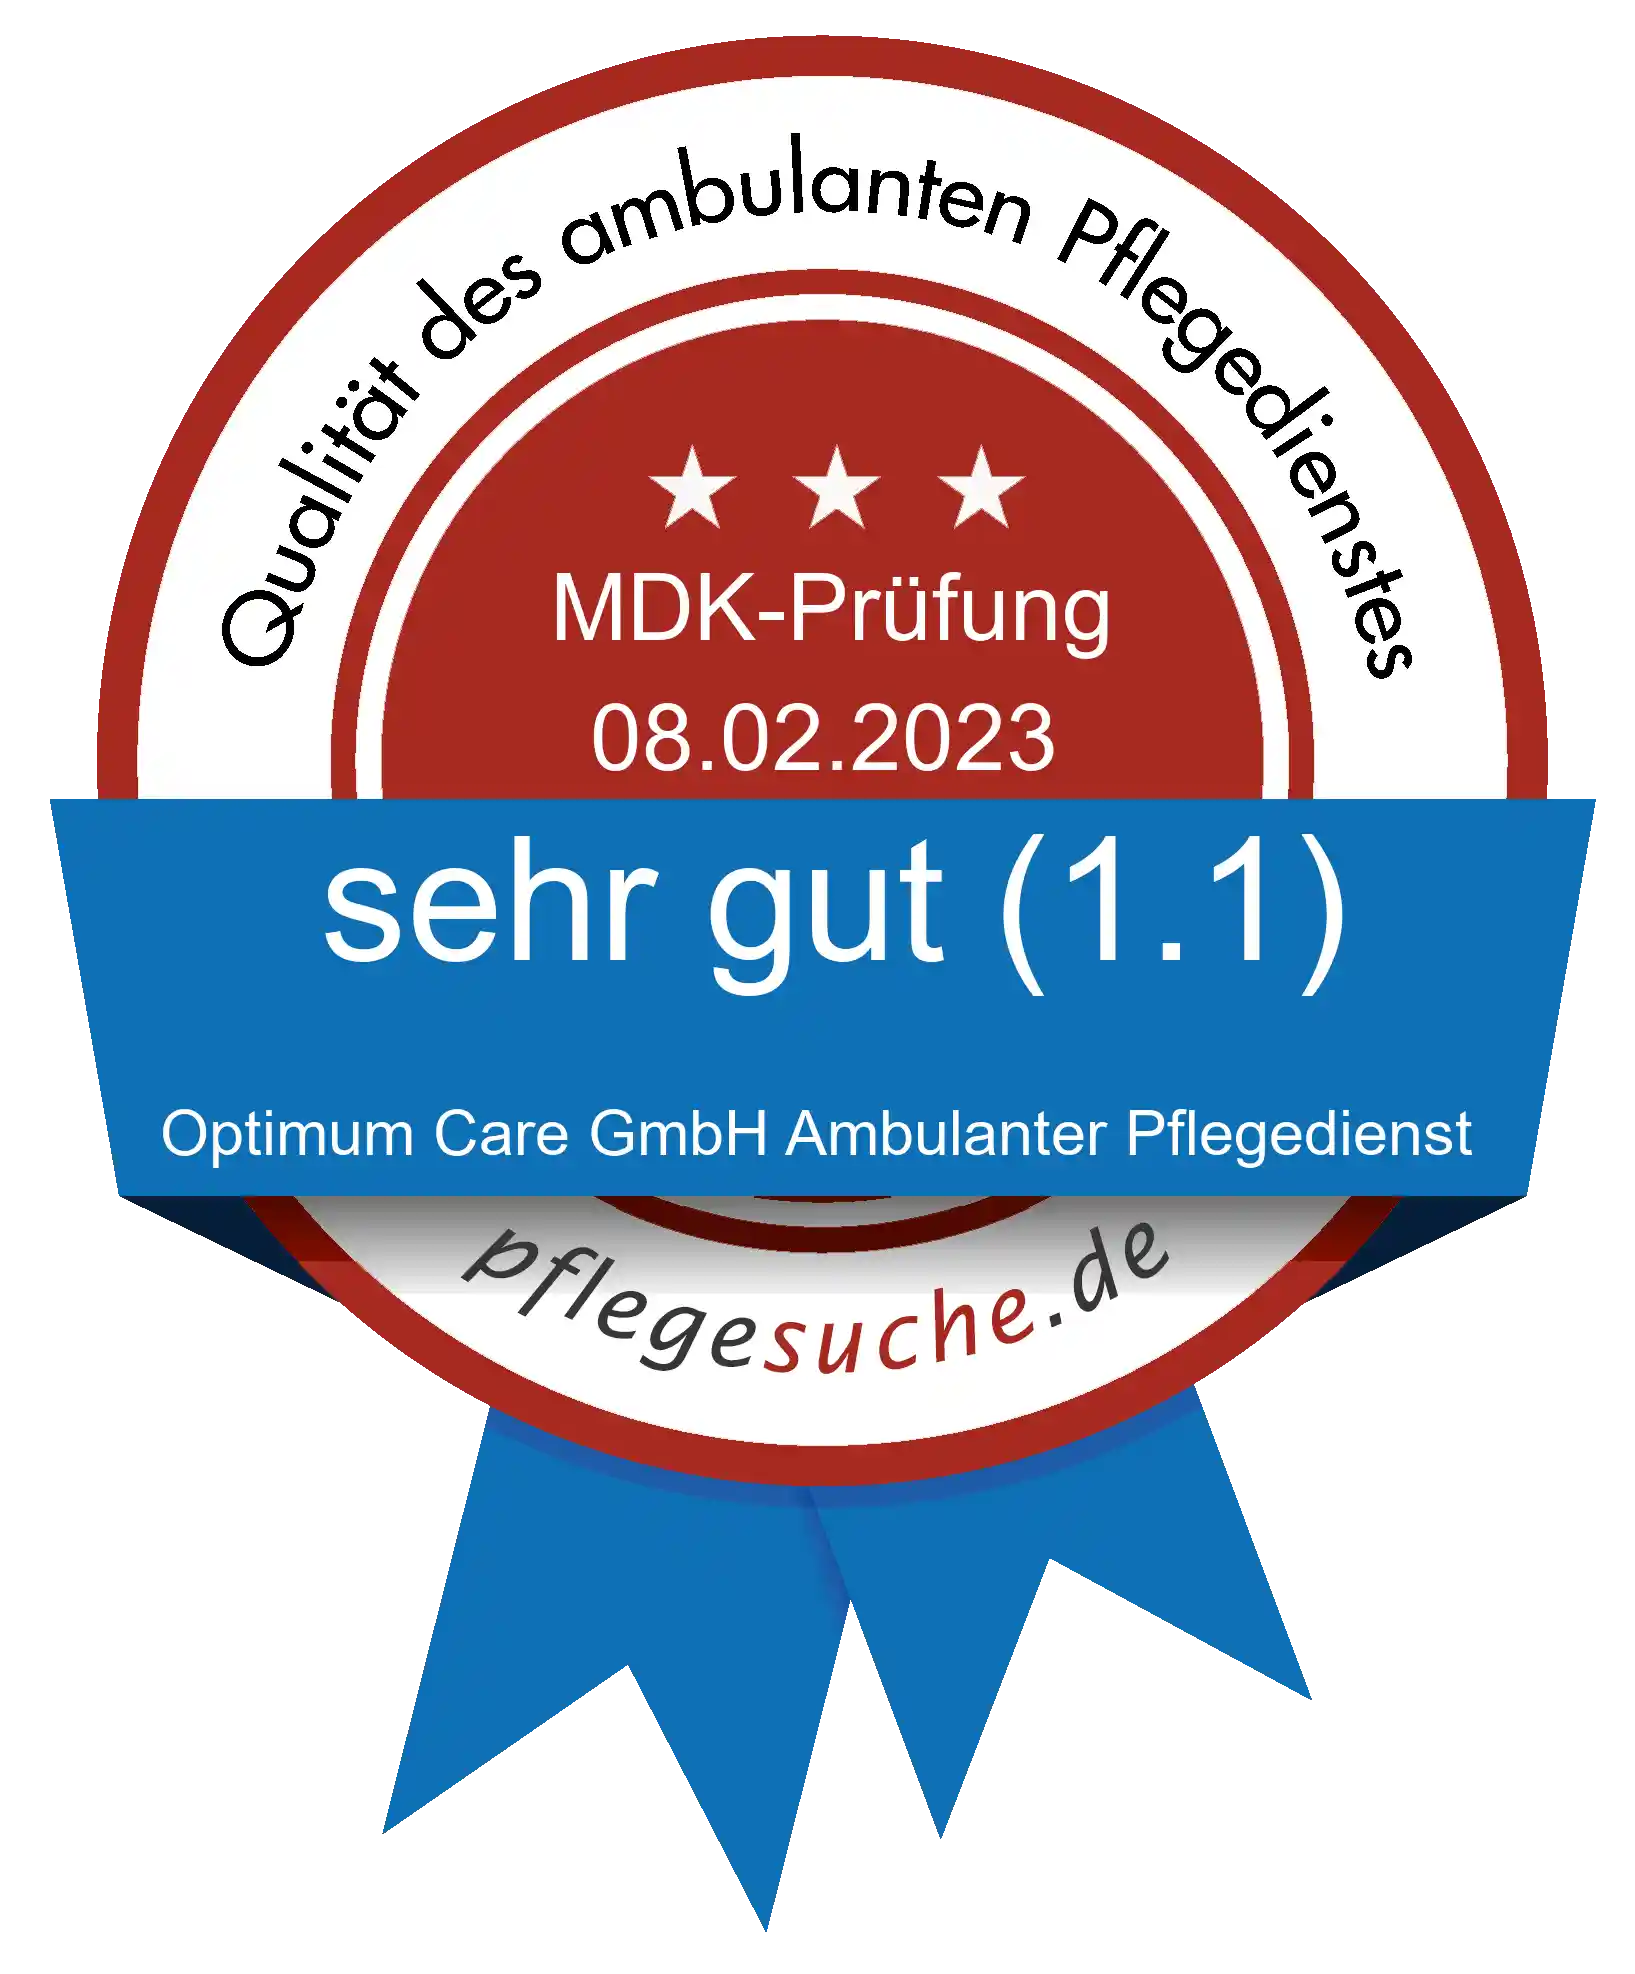 Siegel Benotung: Optimum Care GmbH Ambulanter Pflegedienst